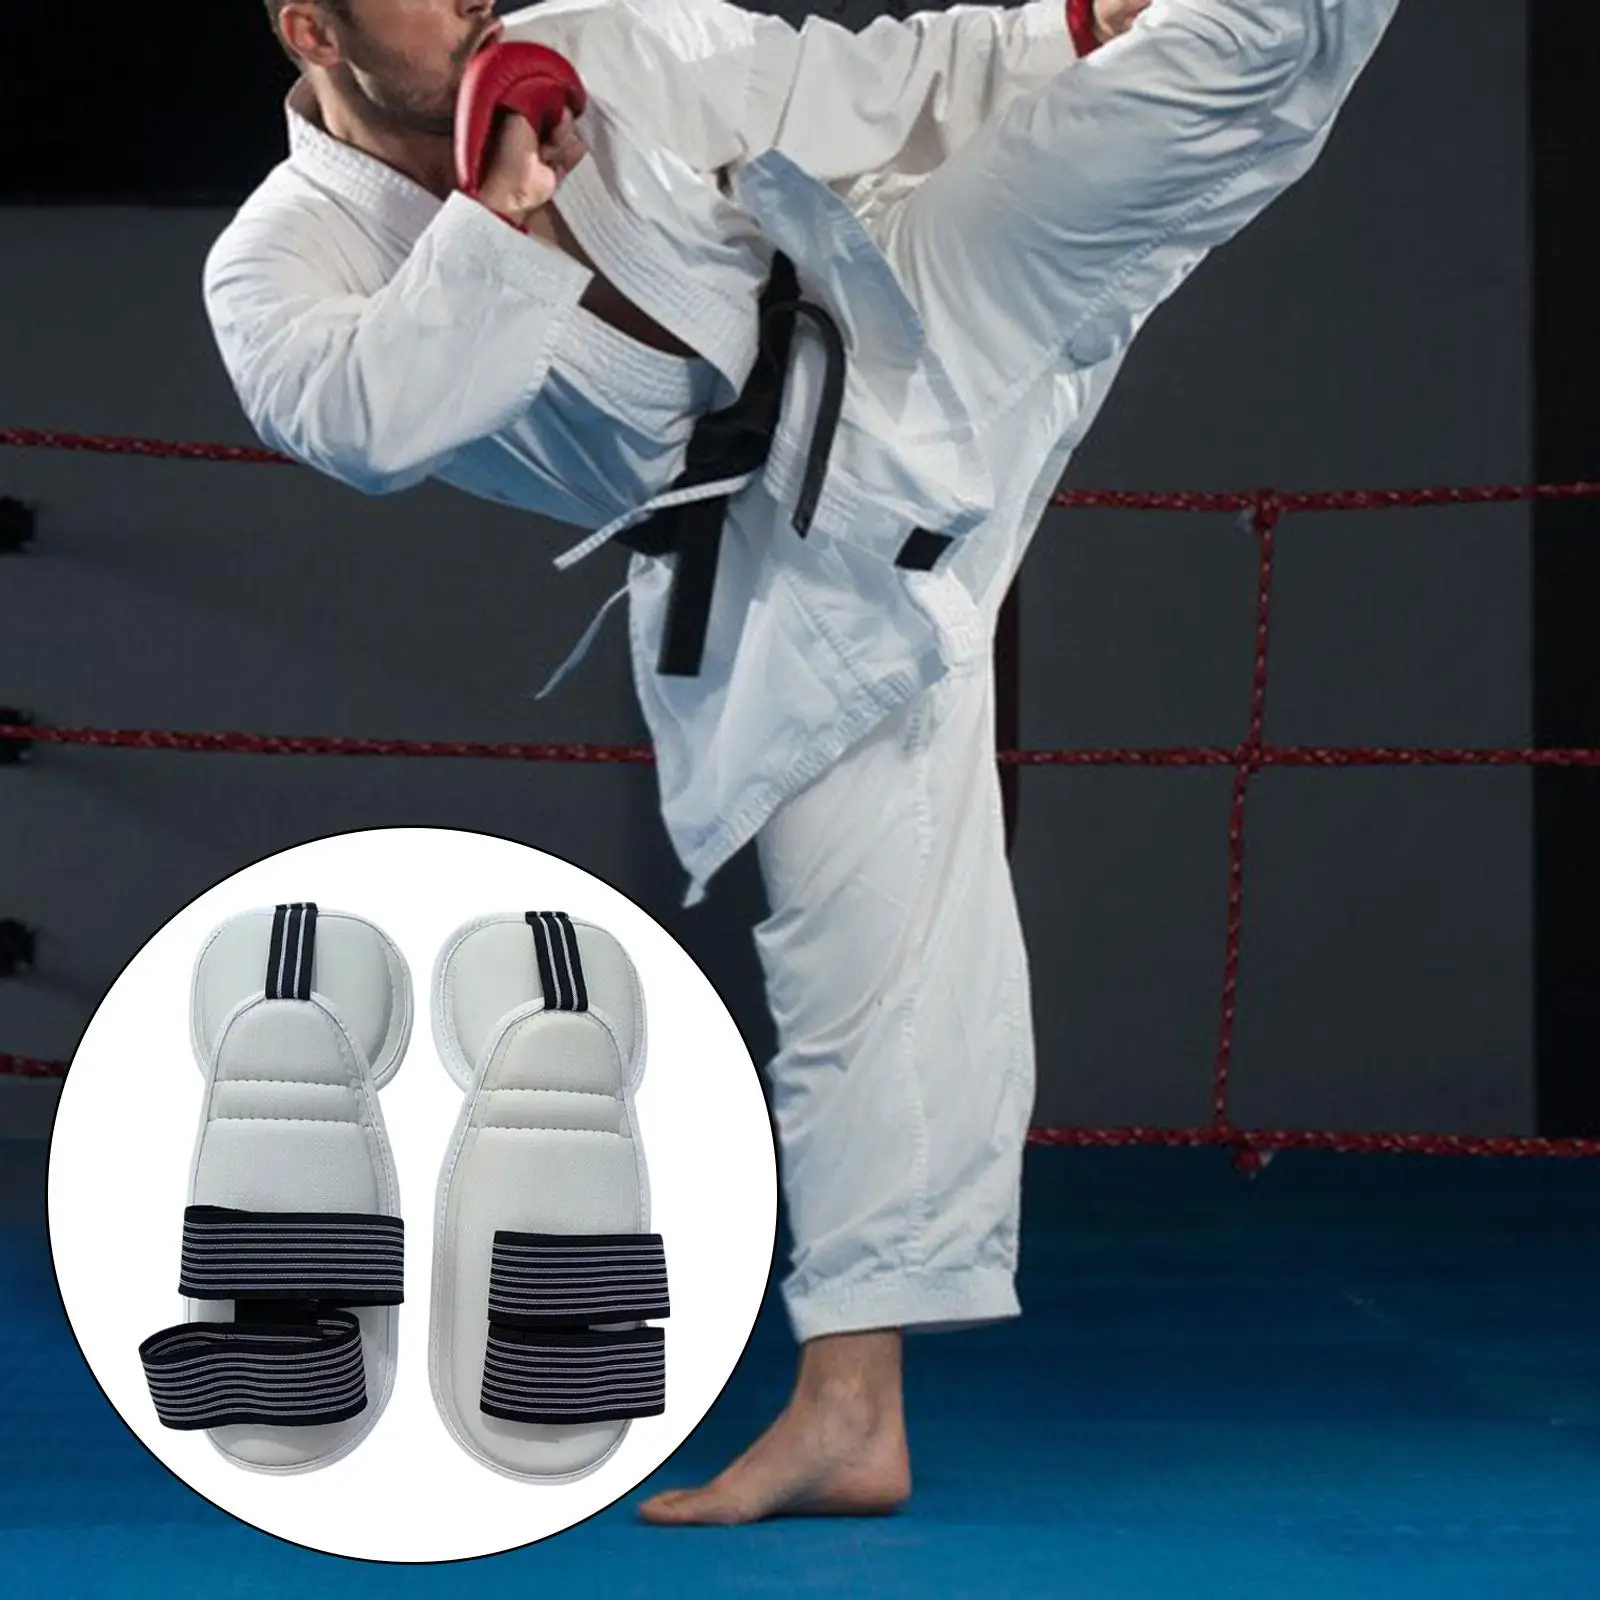 Universal Taekwondo Forearm Guard Protector Match Sanda Protective Gear